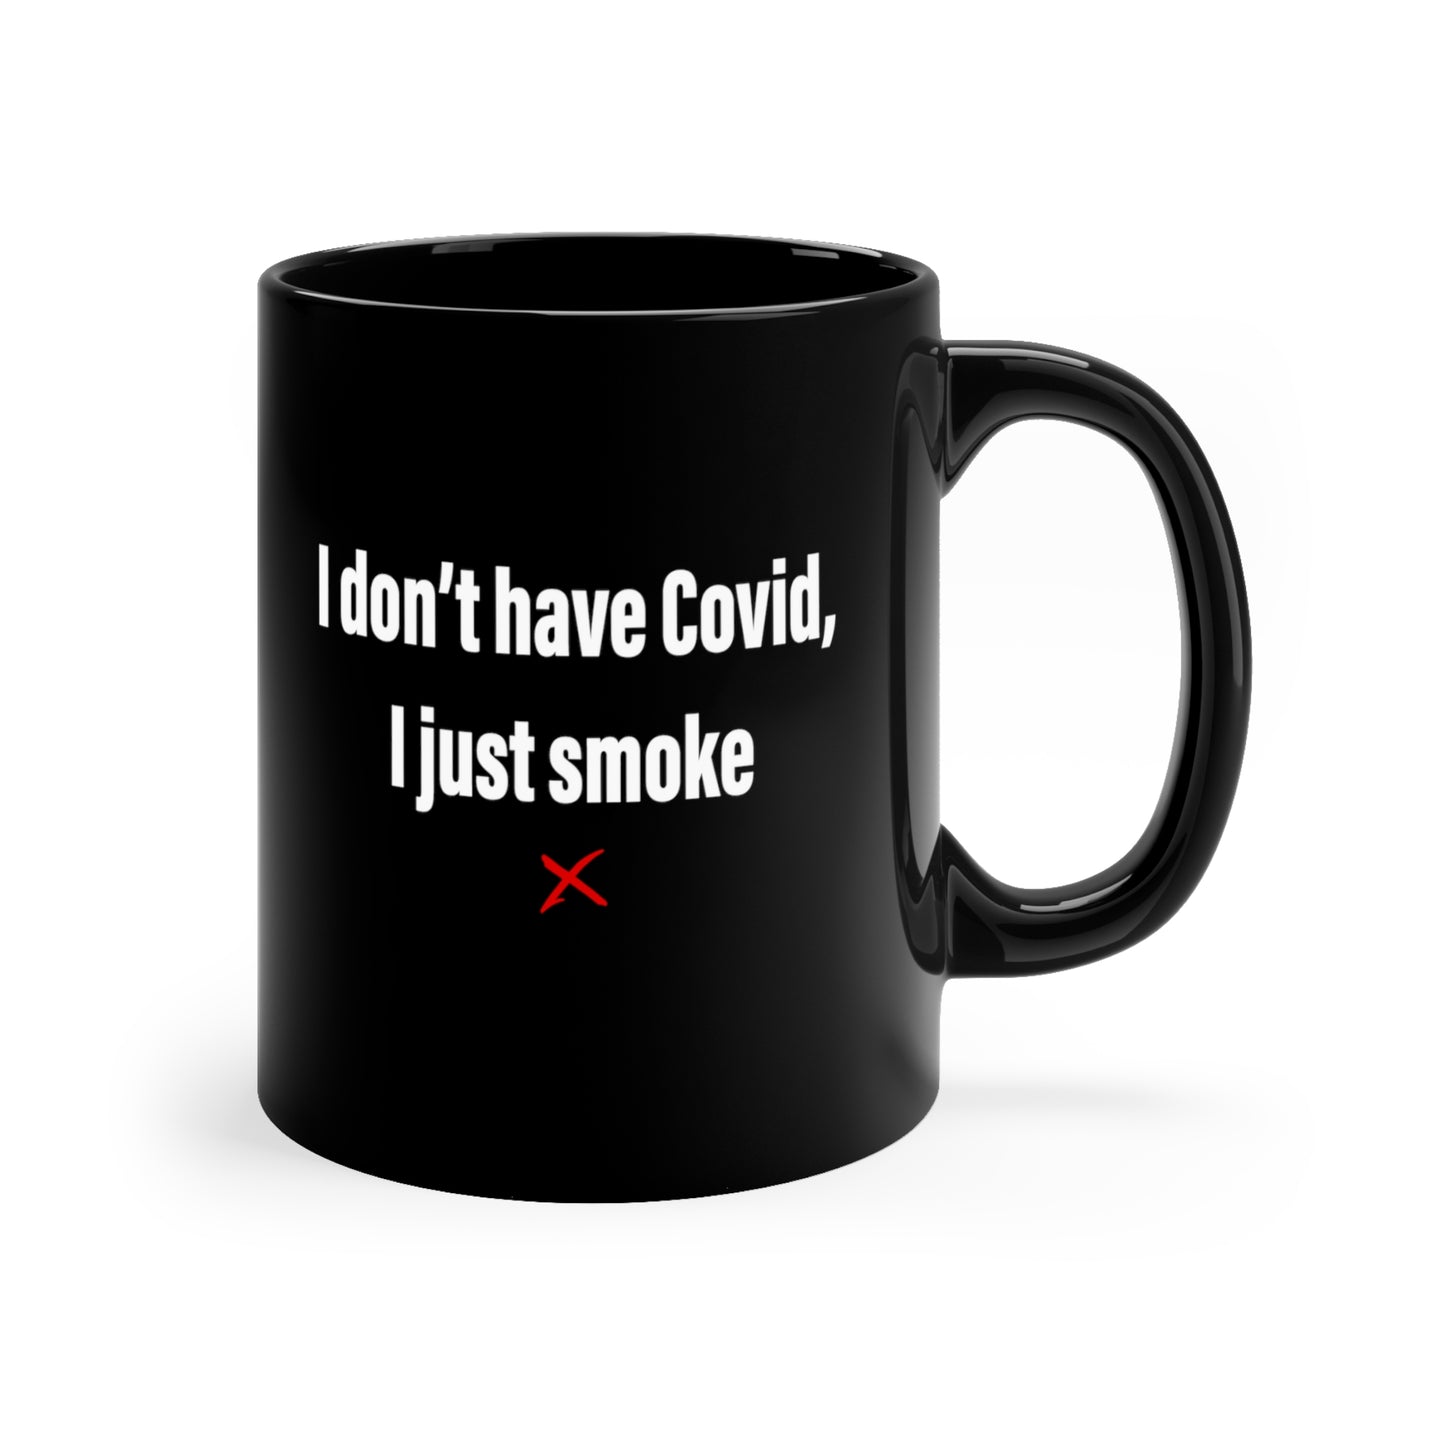 I don't have Covid, I just smoke - Mug